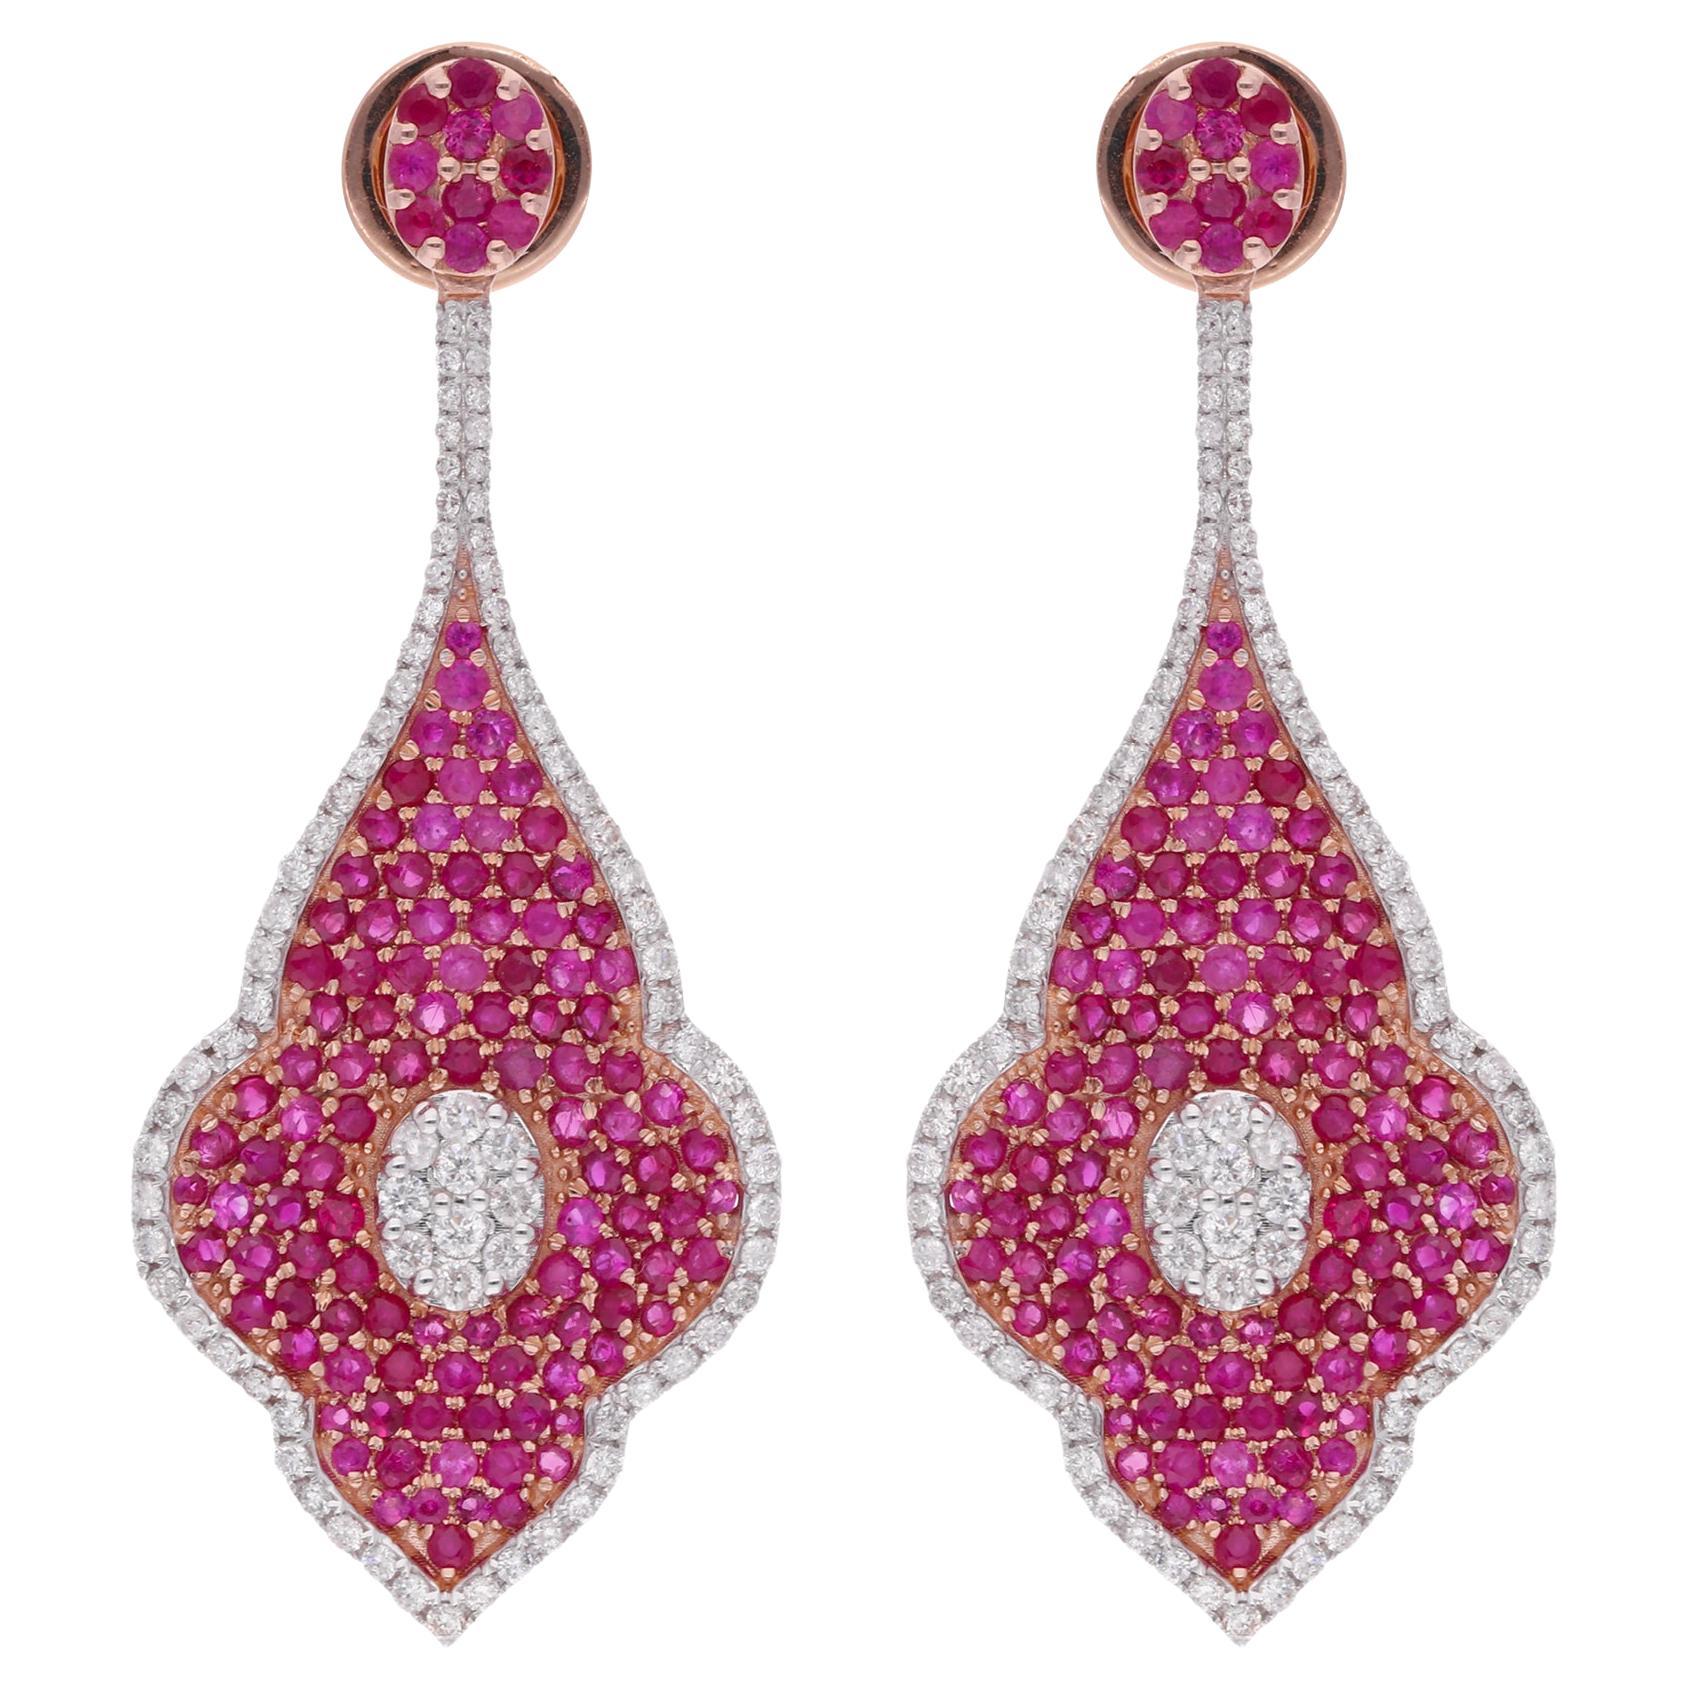 Ruby Gemstone Leaf Dangle Earrings Diamond 18 Karat White & Rose Gold Jewelry